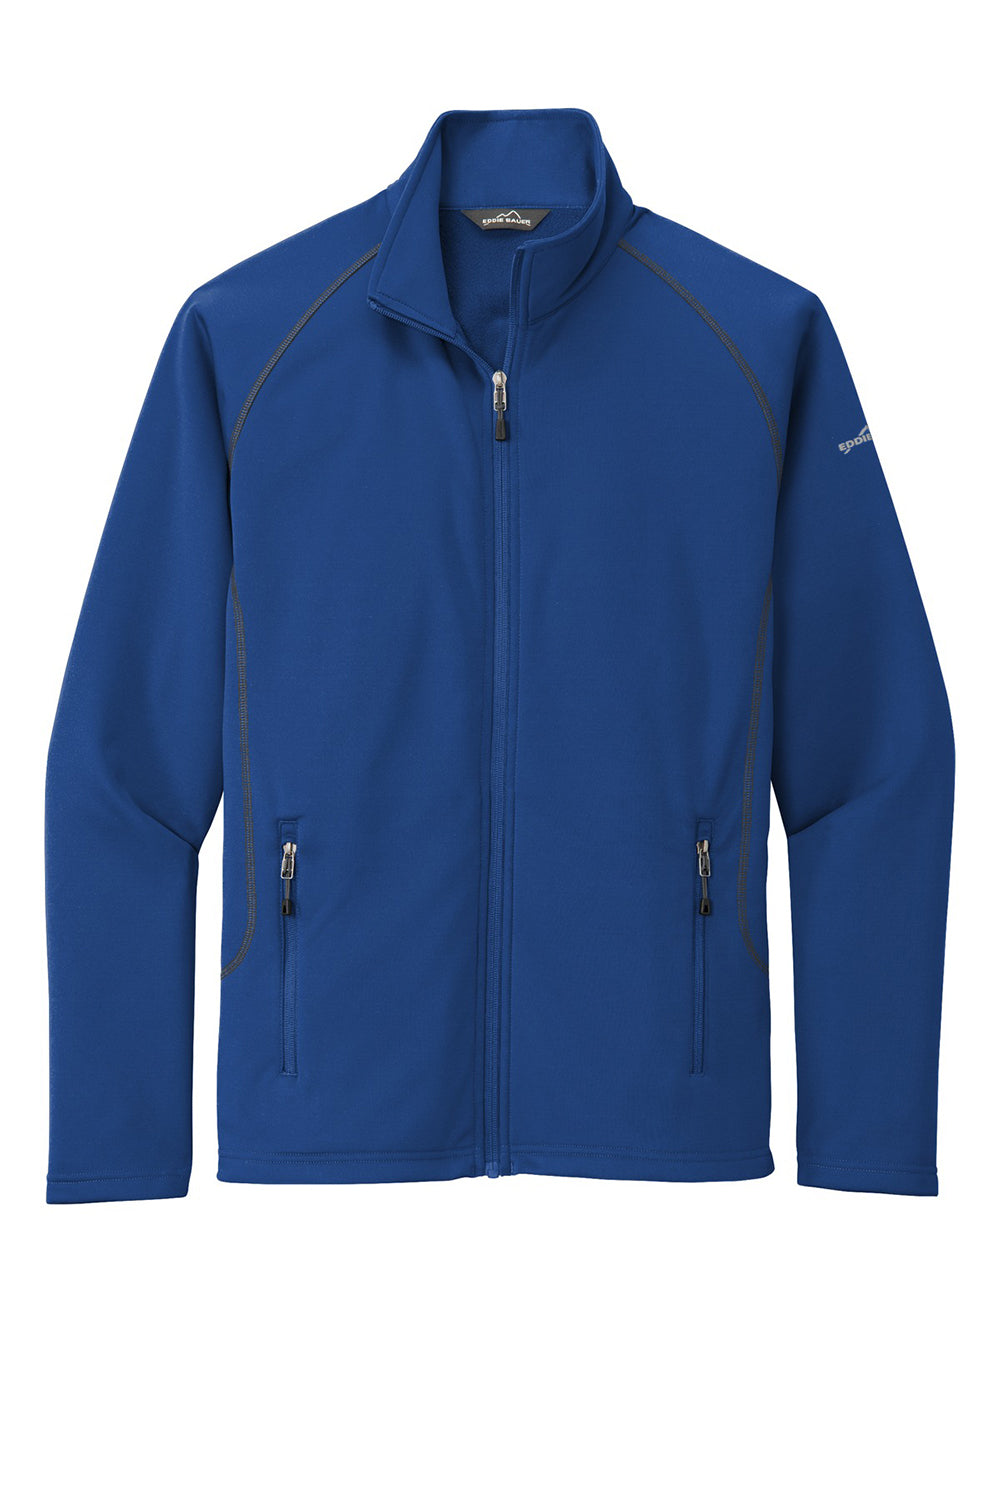 Eddie Bauer EB246 Mens Fleece Full Zip Jacket Cobalt Blue Flat Front